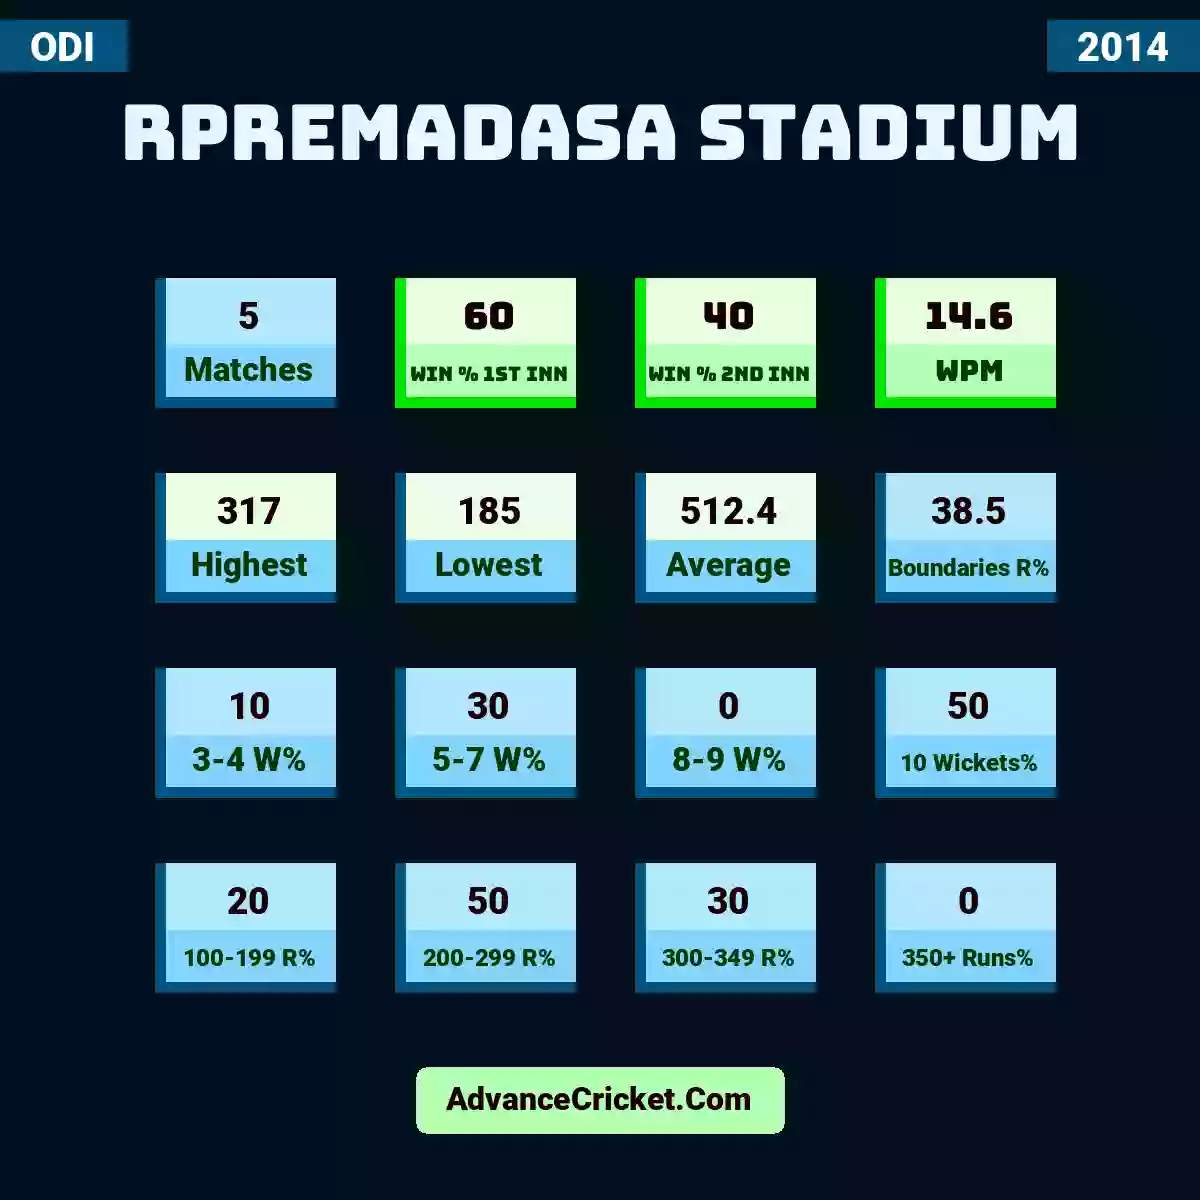 Image showing RPremadasa Stadium with Matches: 5, Win % 1st Inn: 60, Win % 2nd Inn: 40, WPM: 14.6, Highest: 317, Lowest: 185, Average: 512.4, Boundaries R%: 38.5, 3-4 W%: 10, 5-7 W%: 30, 8-9 W%: 0, 10 Wickets%: 50, 100-199 R%: 20, 200-299 R%: 50, 300-349 R%: 30, 350+ Runs%: 0.